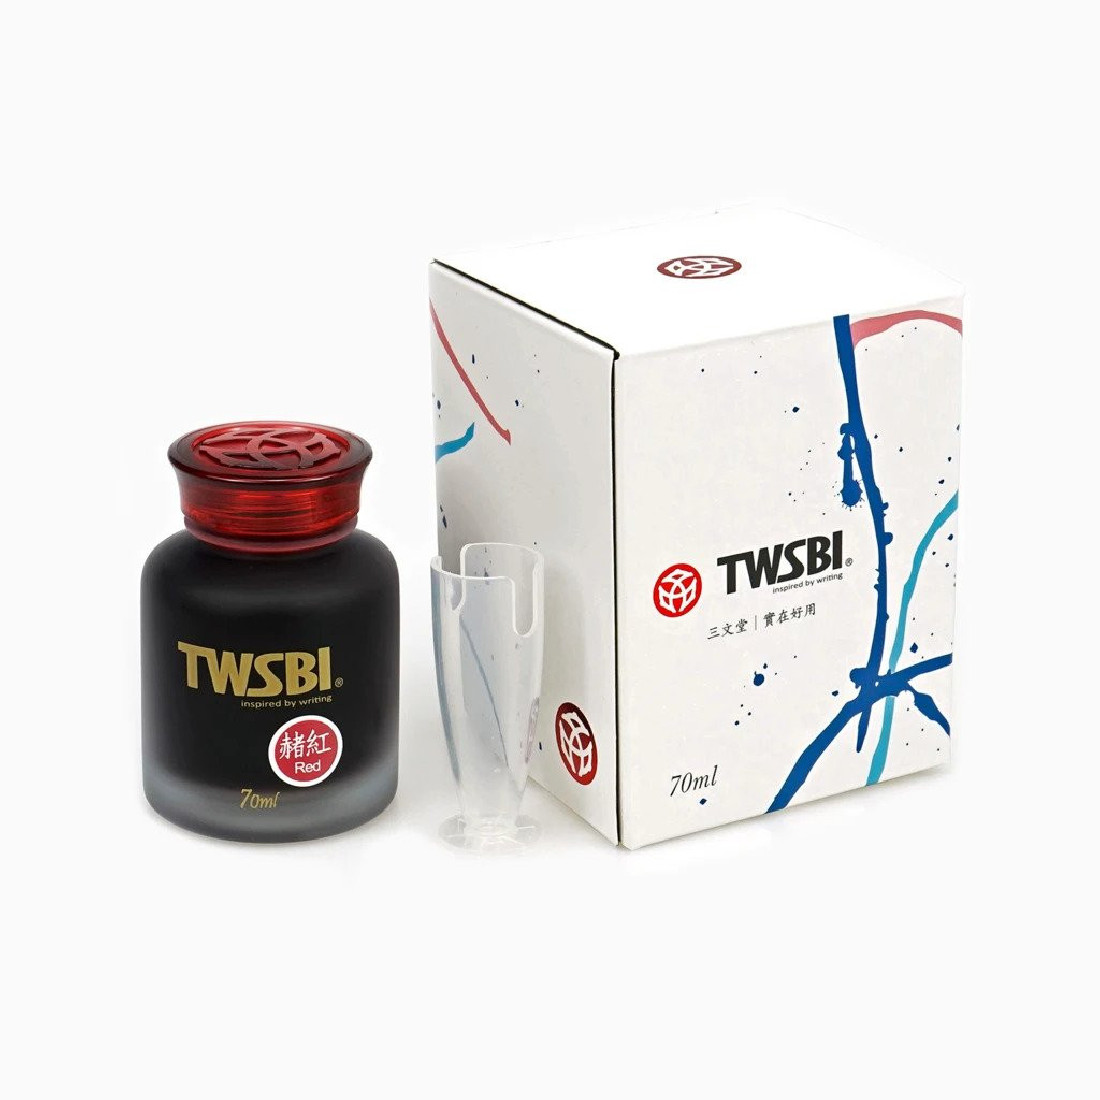 Twsbi 70ml ink red